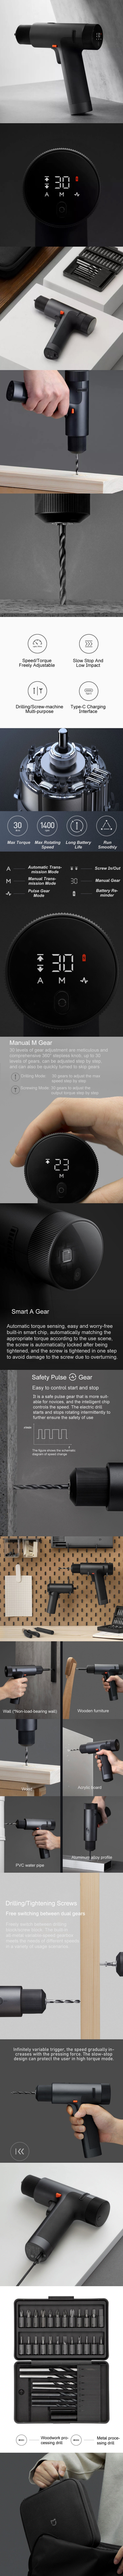 Xiaomi-Mijia-Brushless-Smart-Home-Electric-Drillcf1c0c129beb8c0f.jpg